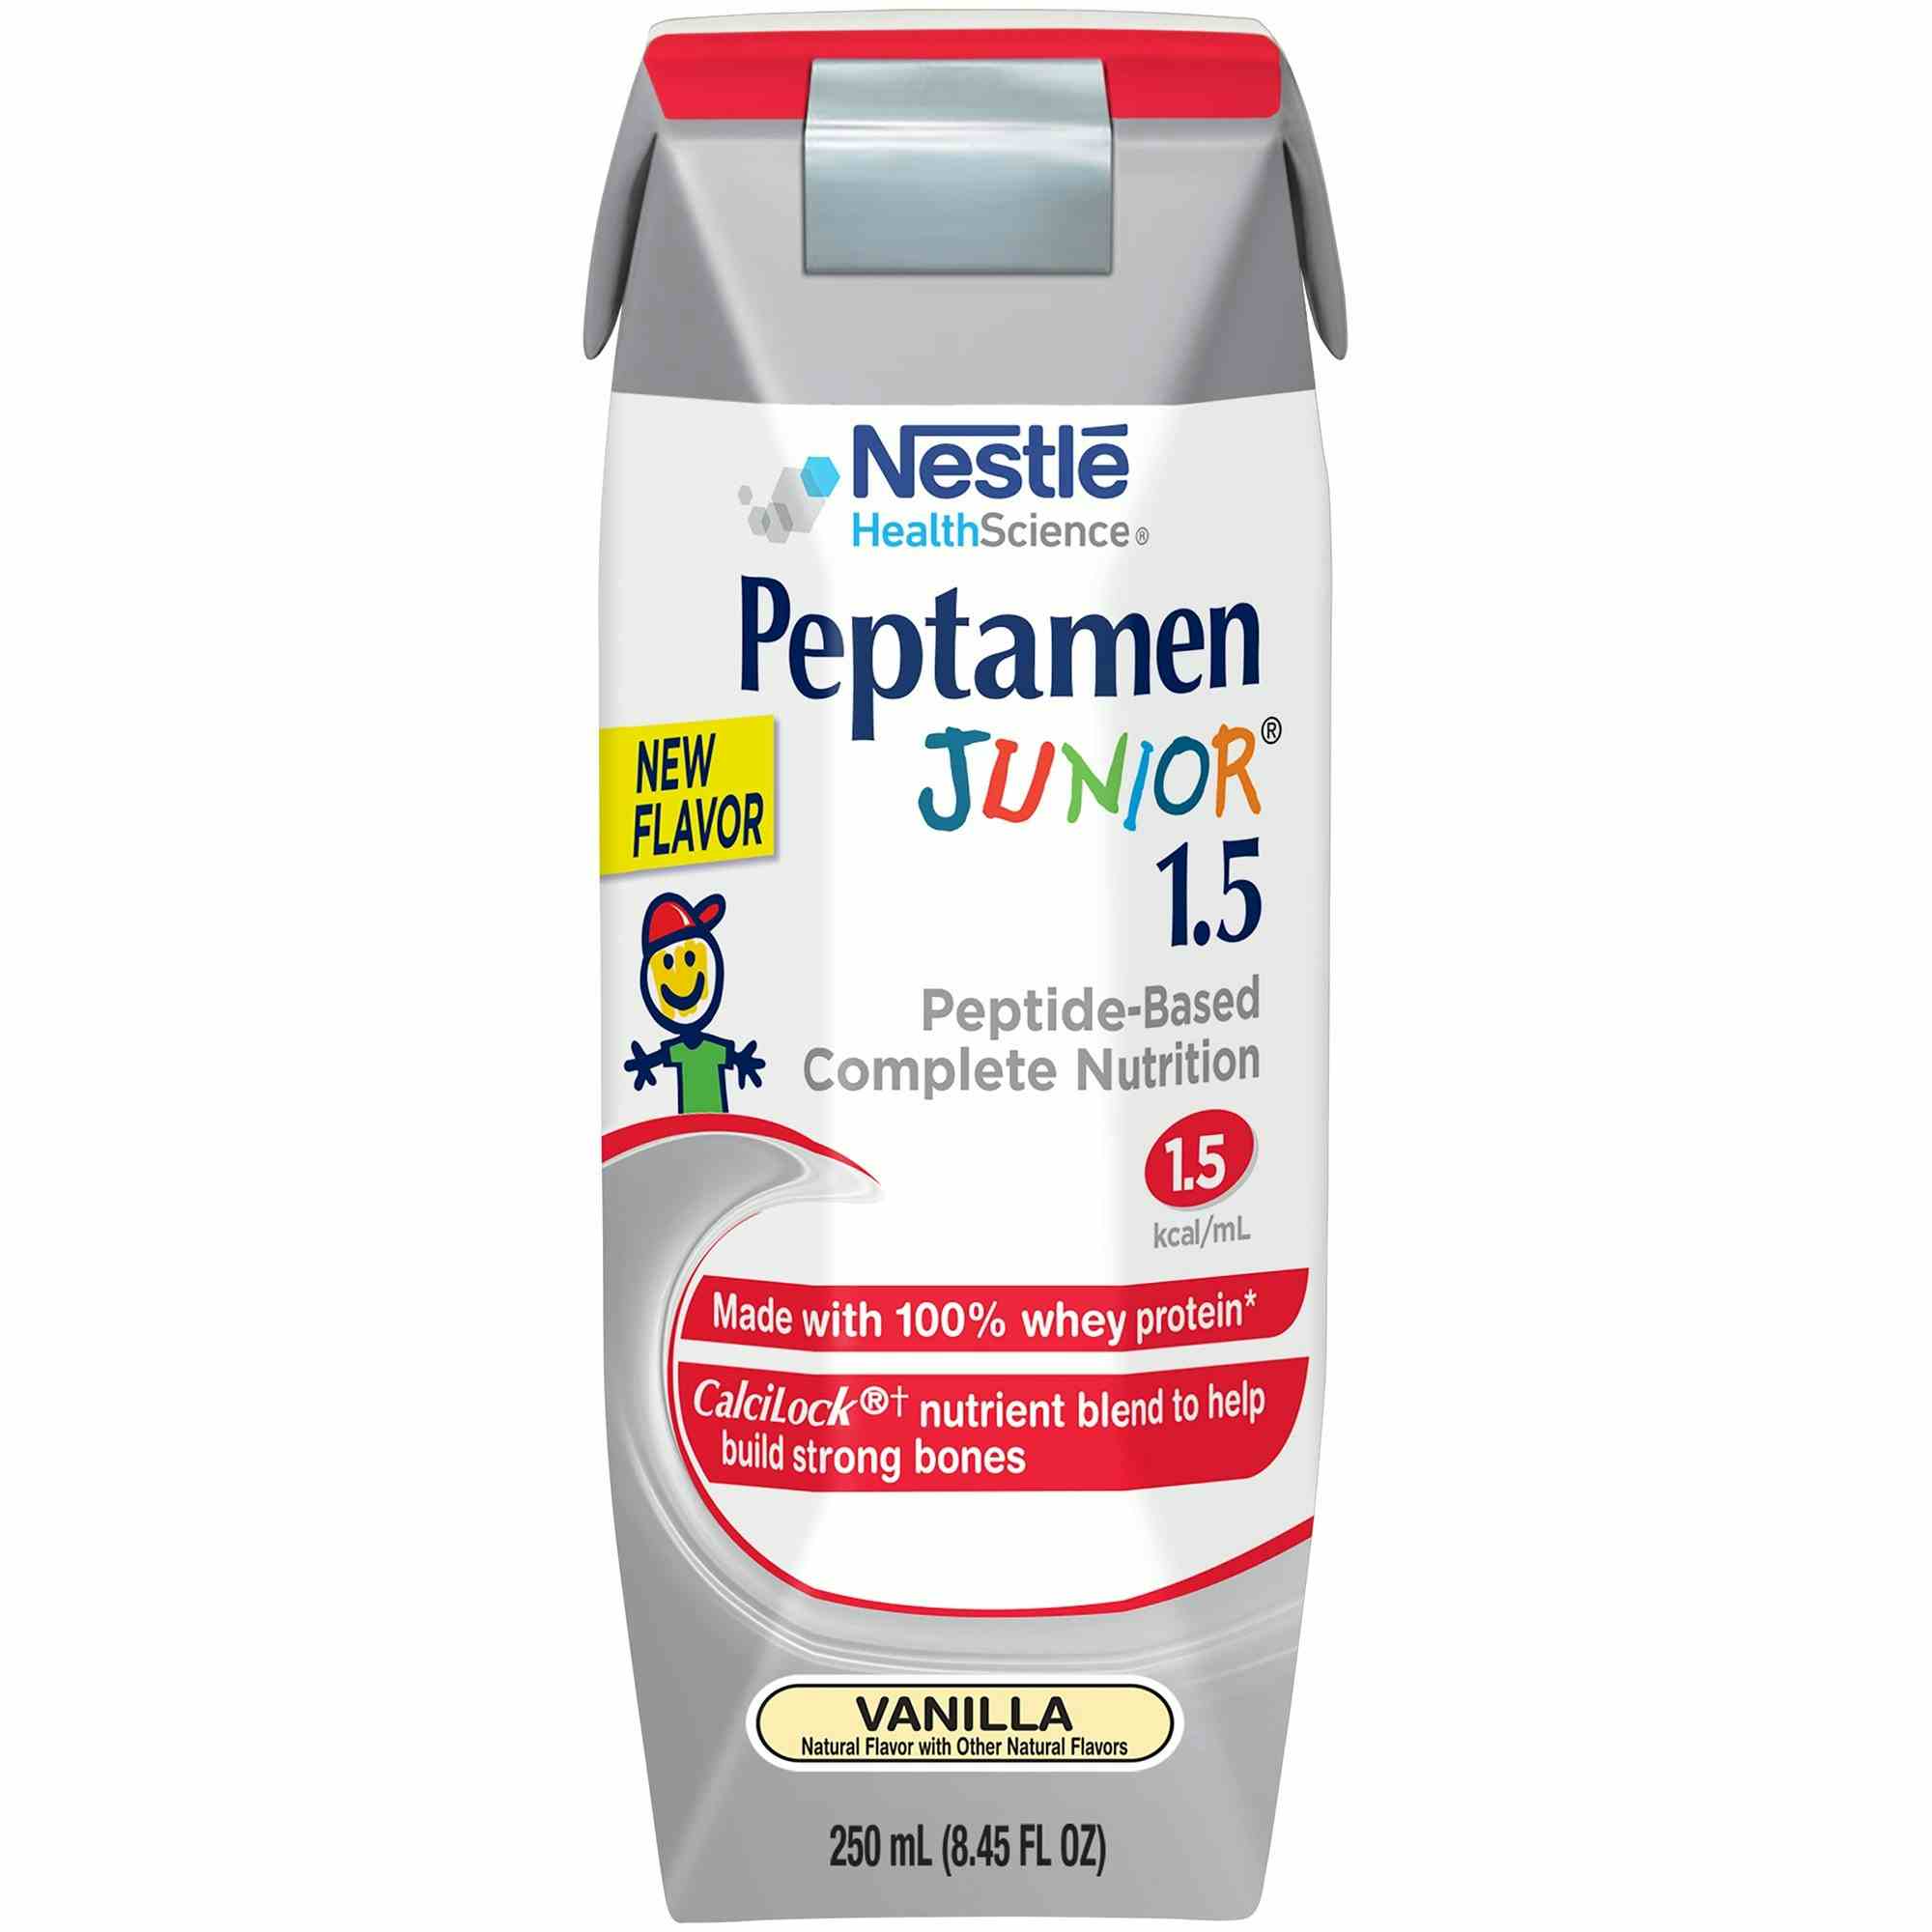 Nestle HealthScience Peptamen Junior 1.5 Peptide-Based Nutritionally Complete Formula, Vanilla, 8.45 oz., 00098716855359, 1 Each